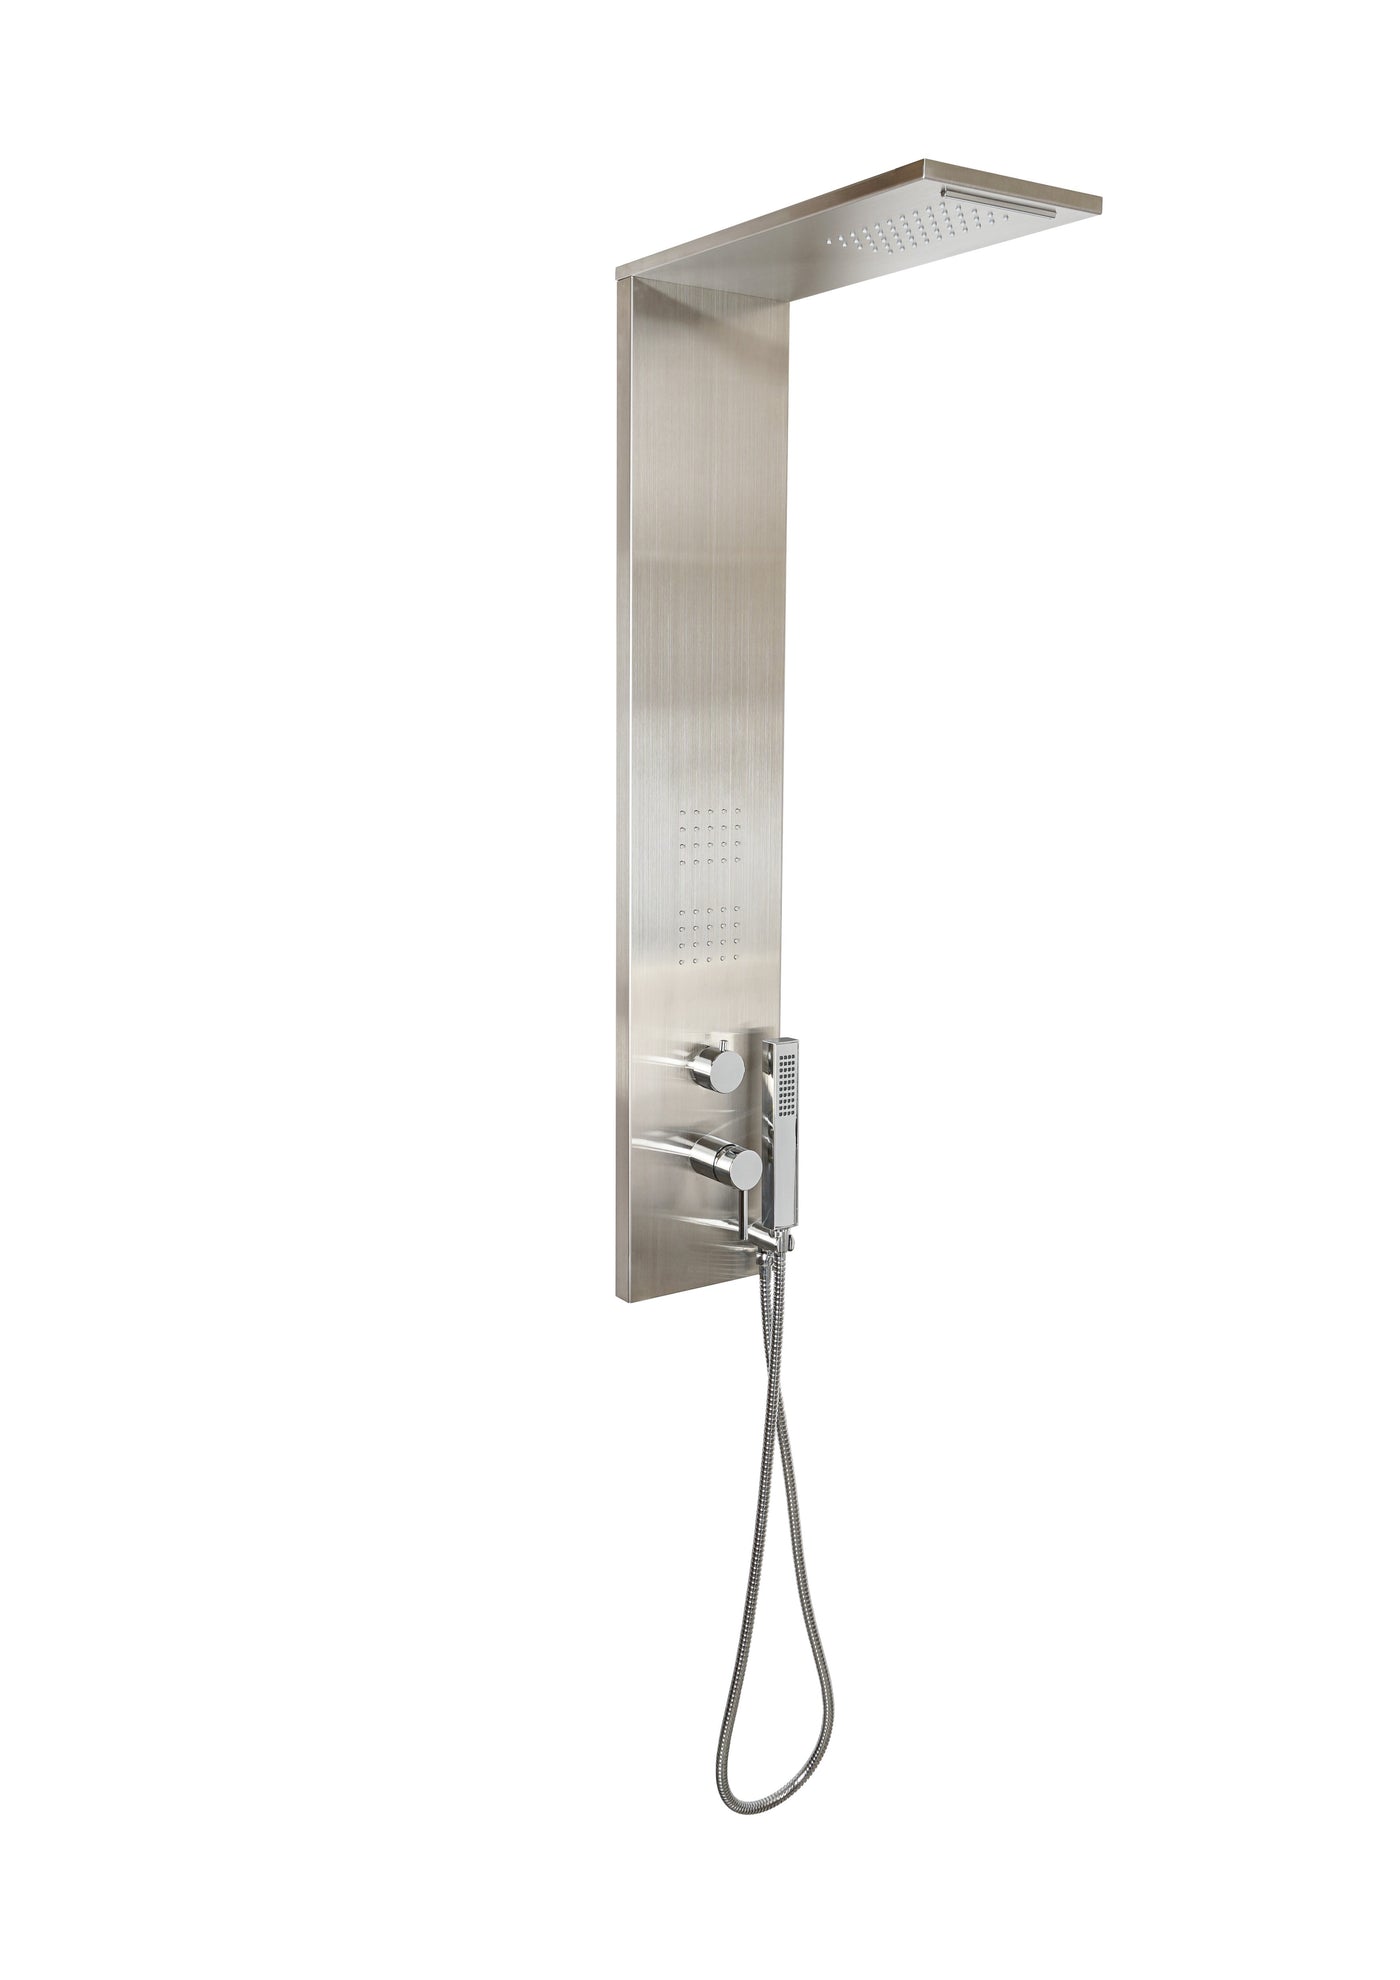 SIHLA shower column in brushed steel